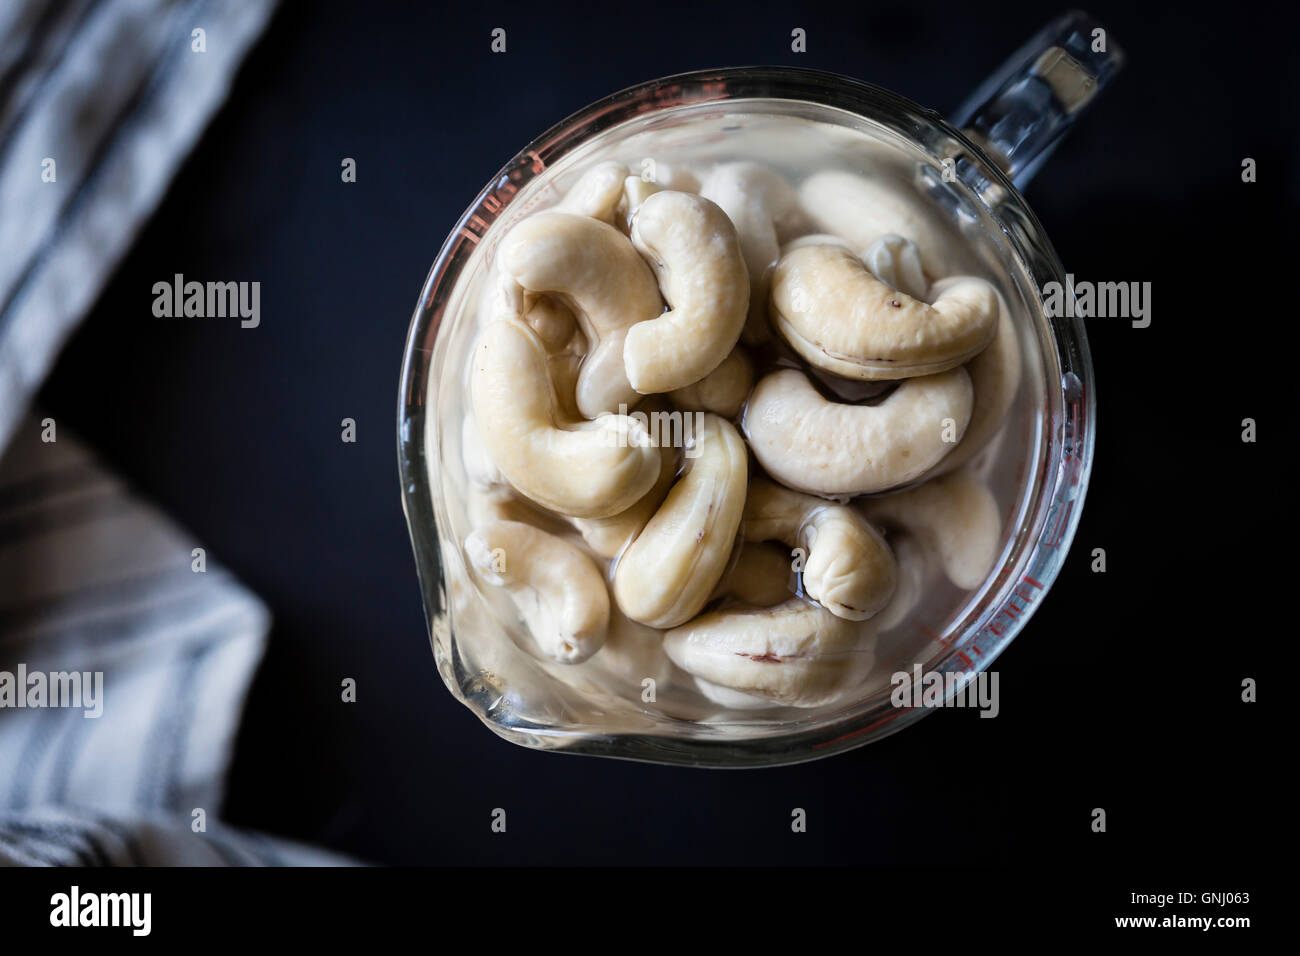 Cashew nuts soaking in a measuring jug Stock Photo